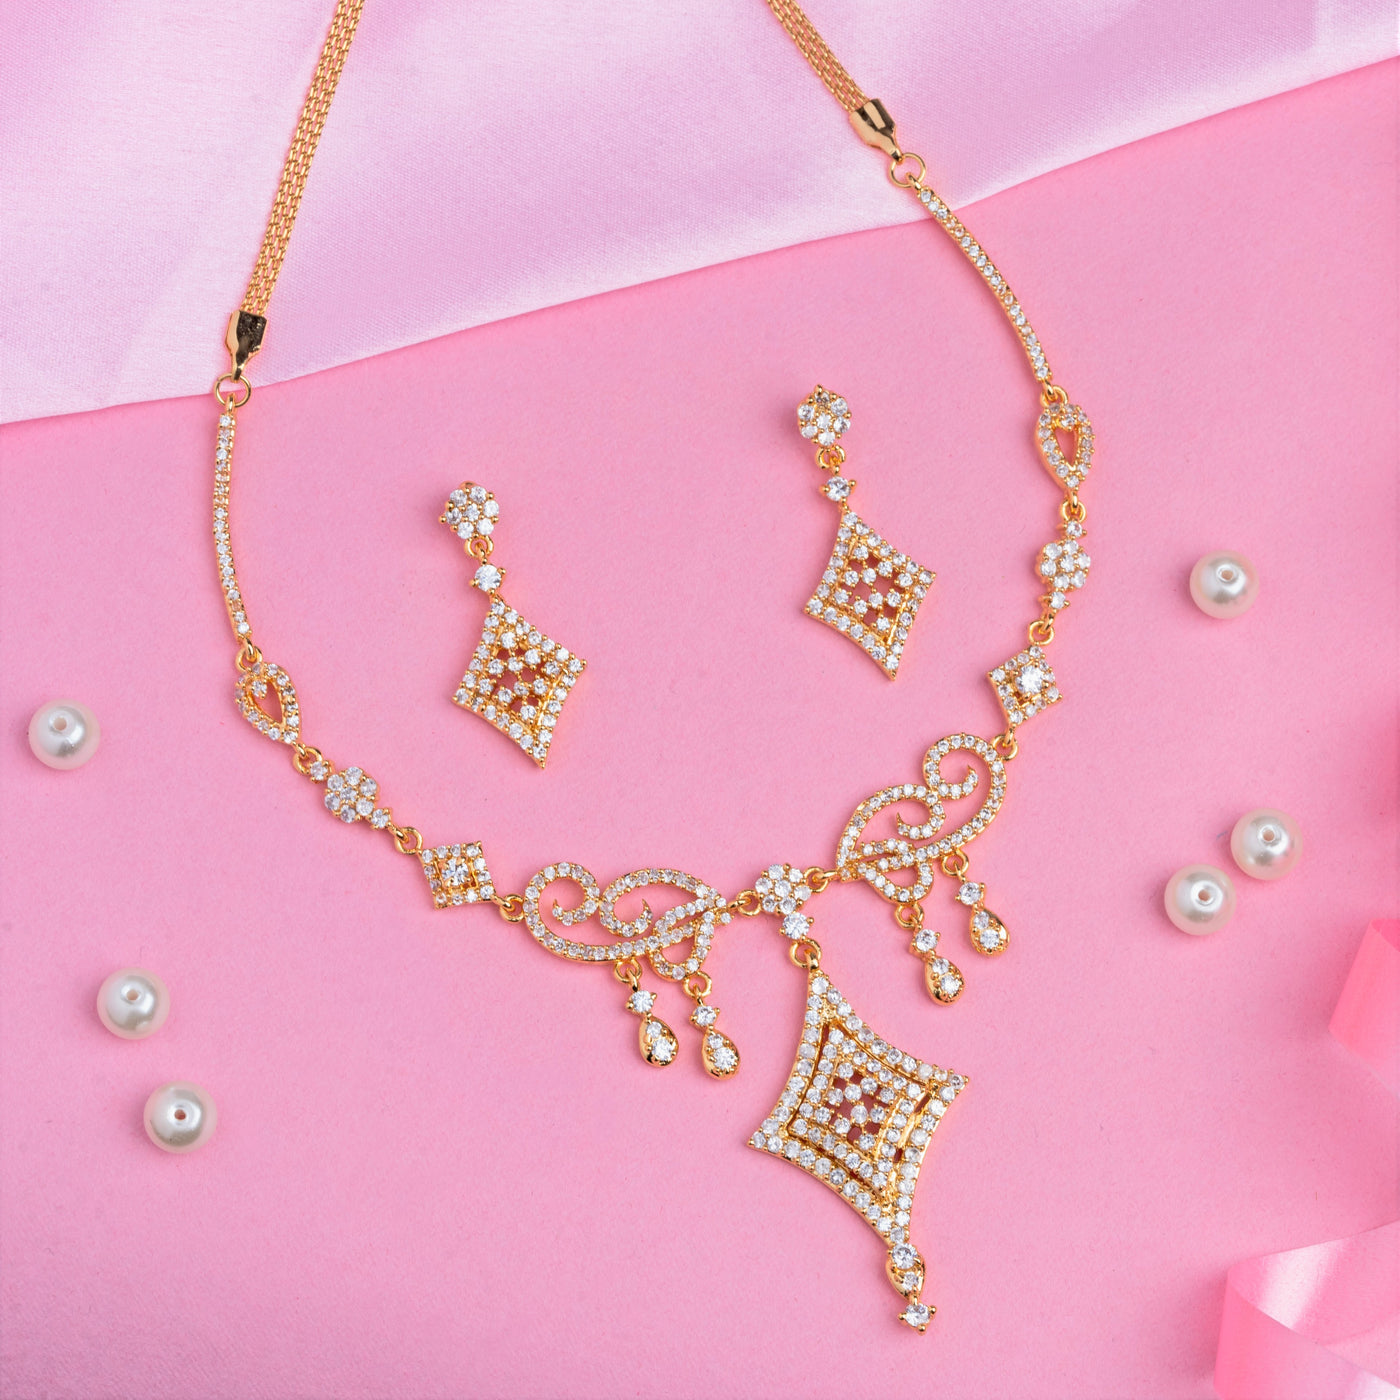 Estele 24 Kt Gold Plated Geometric Shaped American Diamond Necklace Set for Women